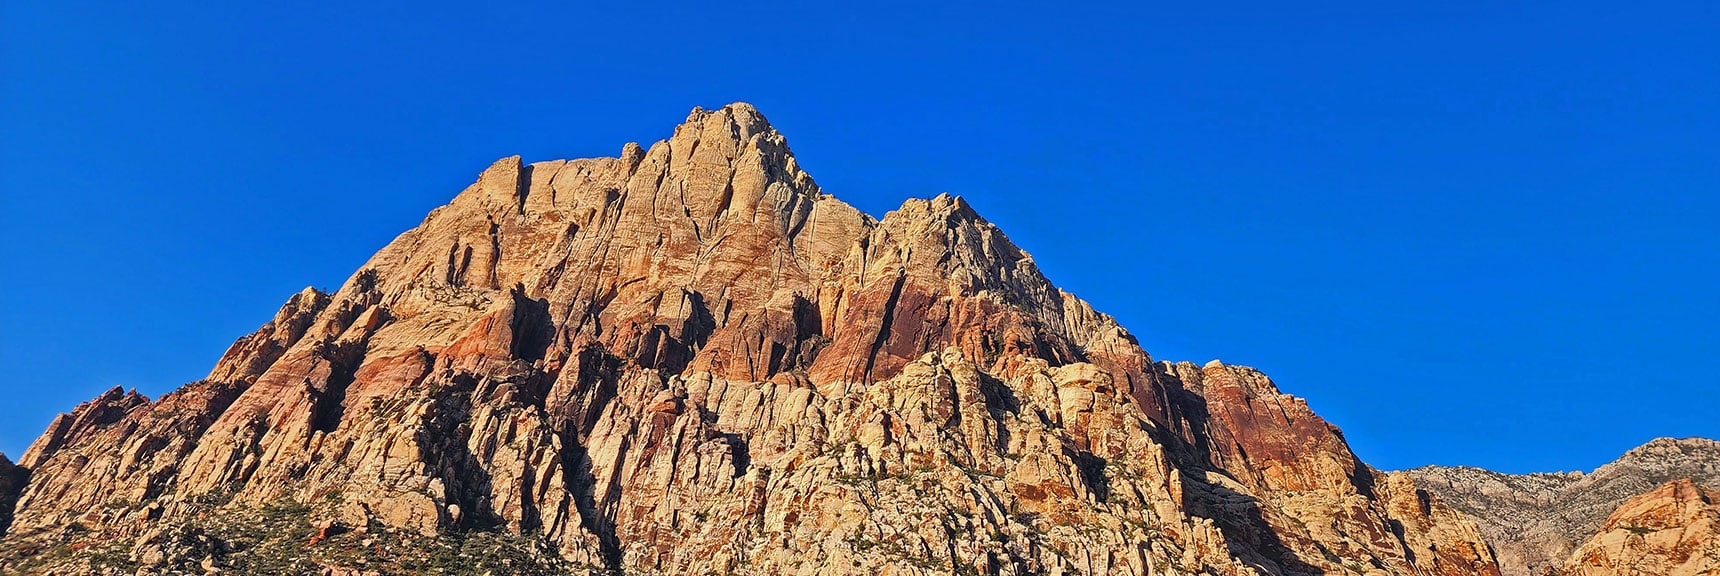 Closer View of NE Mt. Wilson | Knoll Trail | Red Rock Canyon National Conservation Area, Nevada | David Smith | LasVegasAreaTrails.com